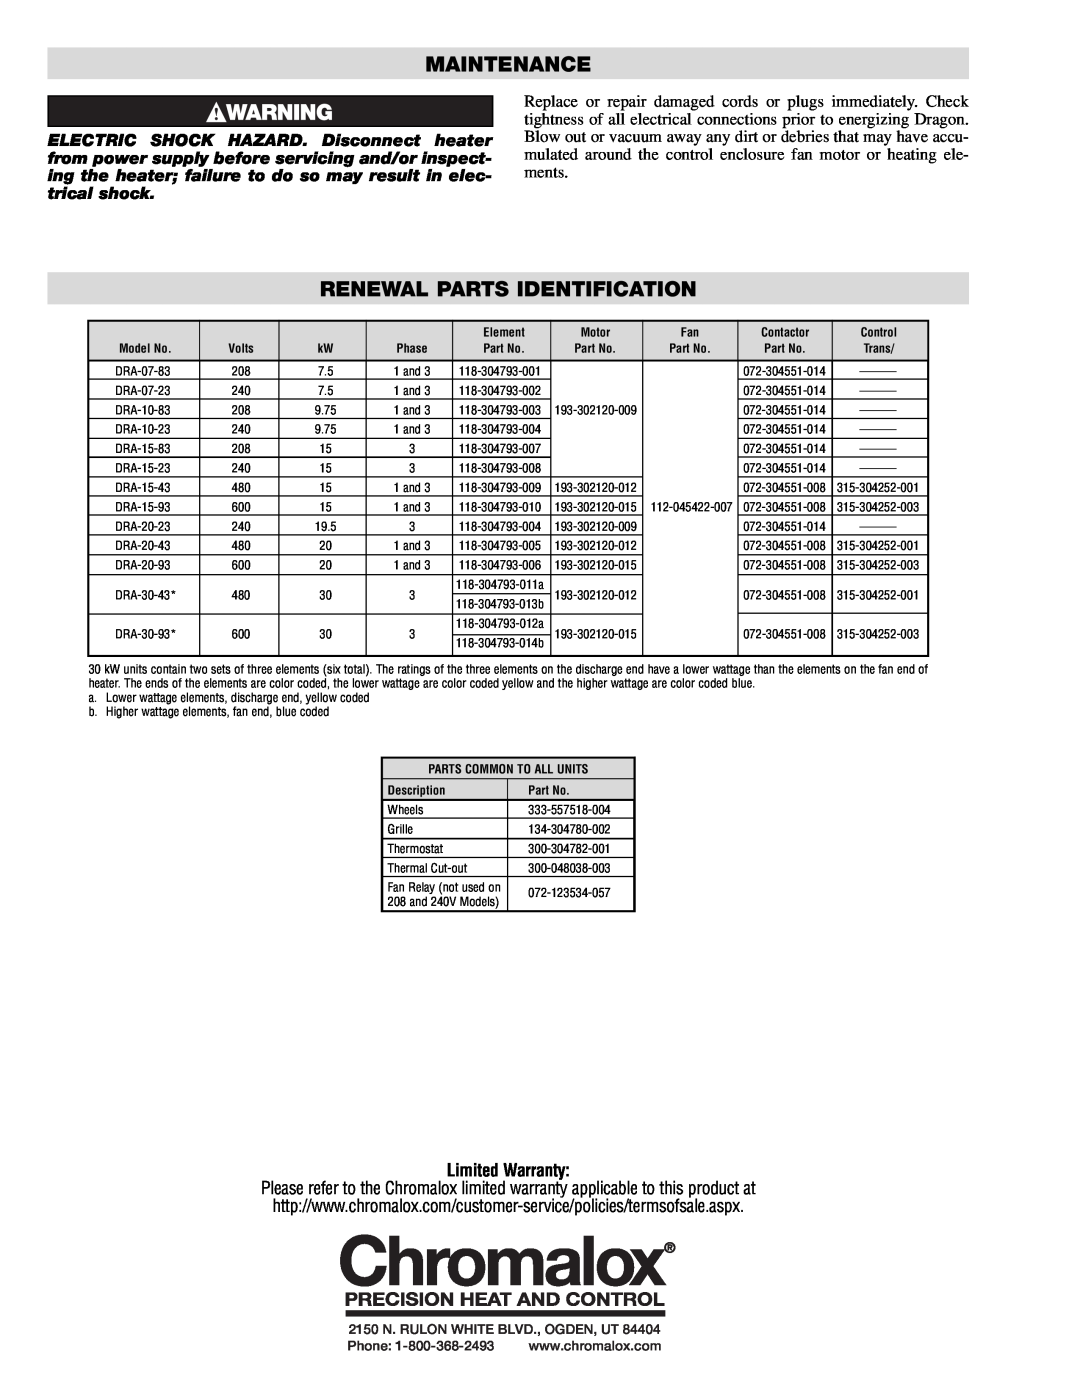 Chromalox PF497-1 Maintenance, Renewal Parts Identification, Limited Warranty, 2150 N. RULON WHITE BLVD., OGDEN, UT, Phone 